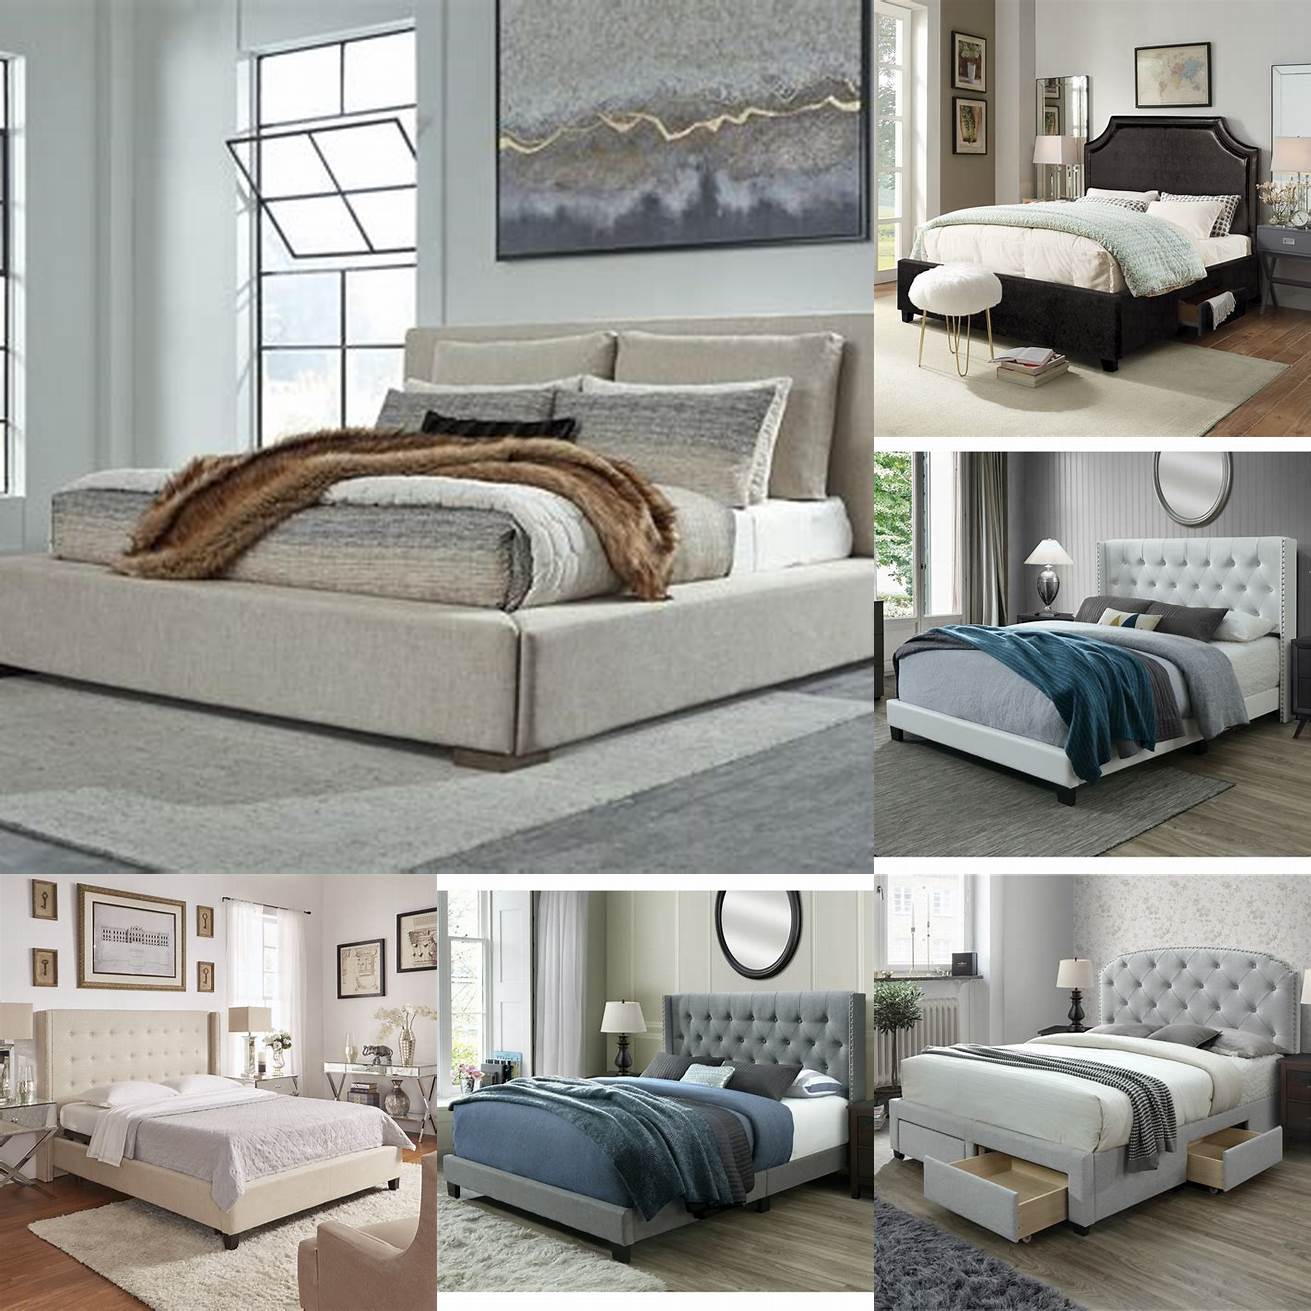 3 Upholstered beds